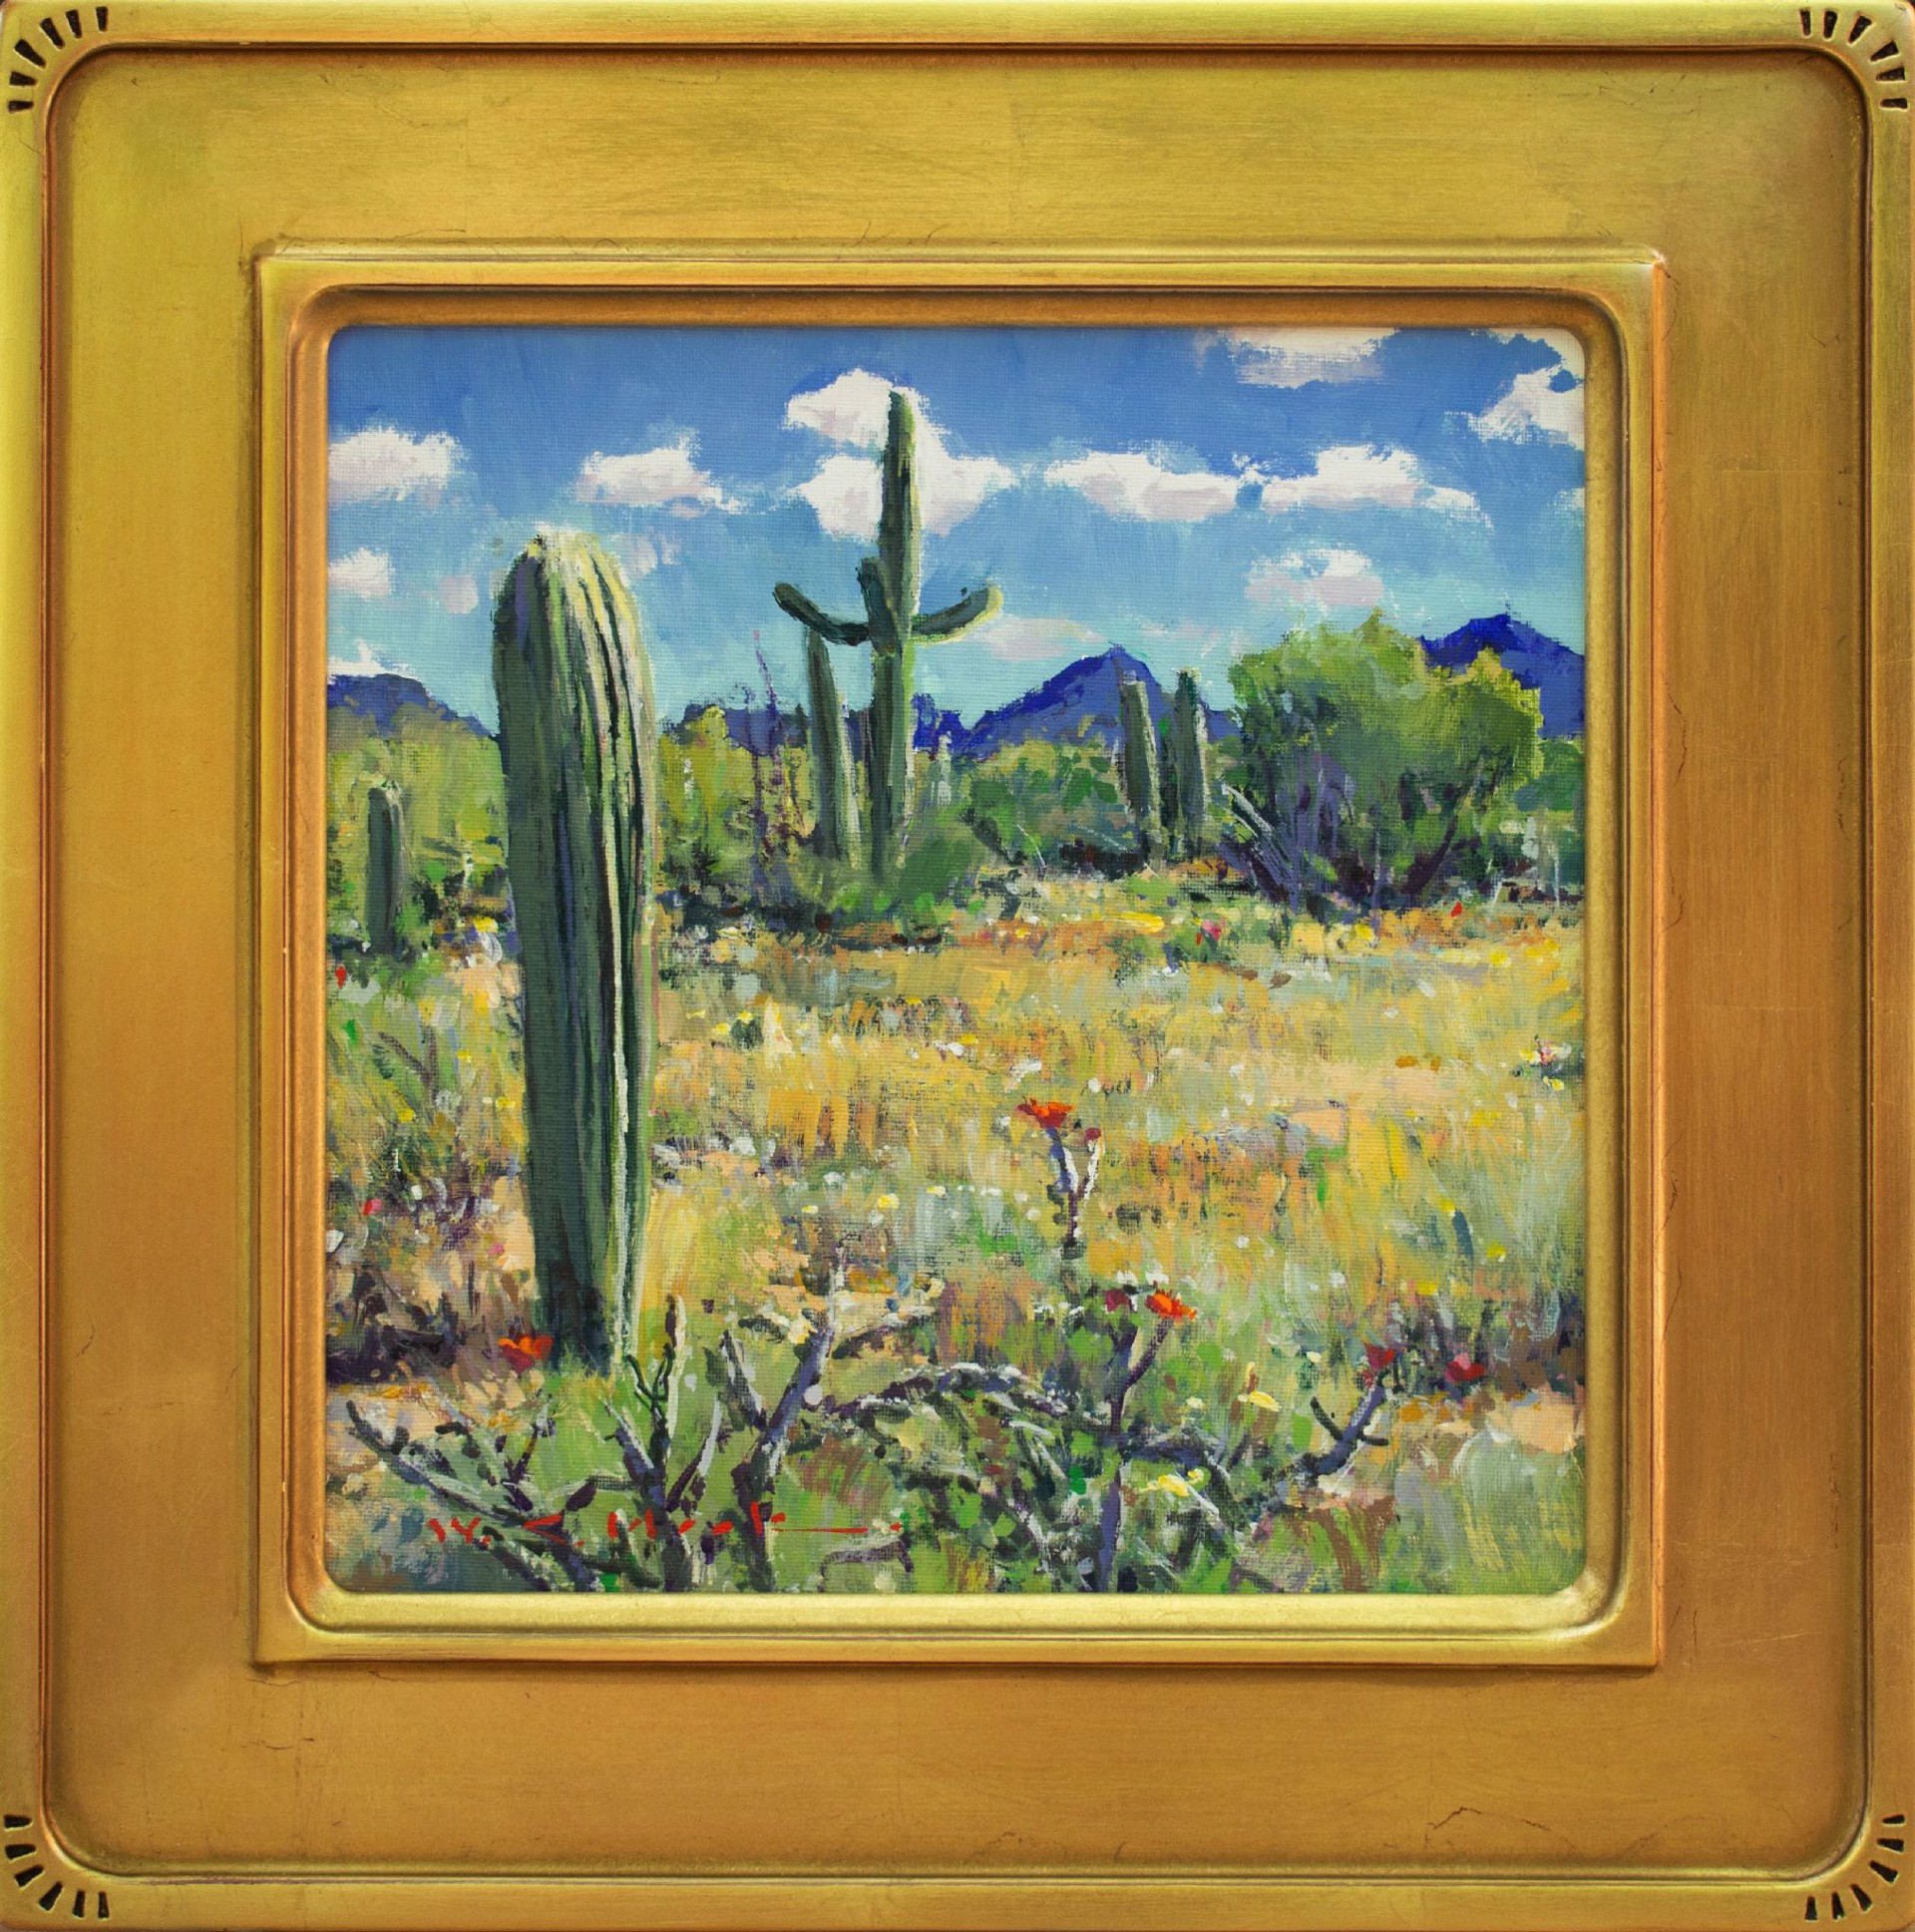 Sonoran Spring by William C. Hook